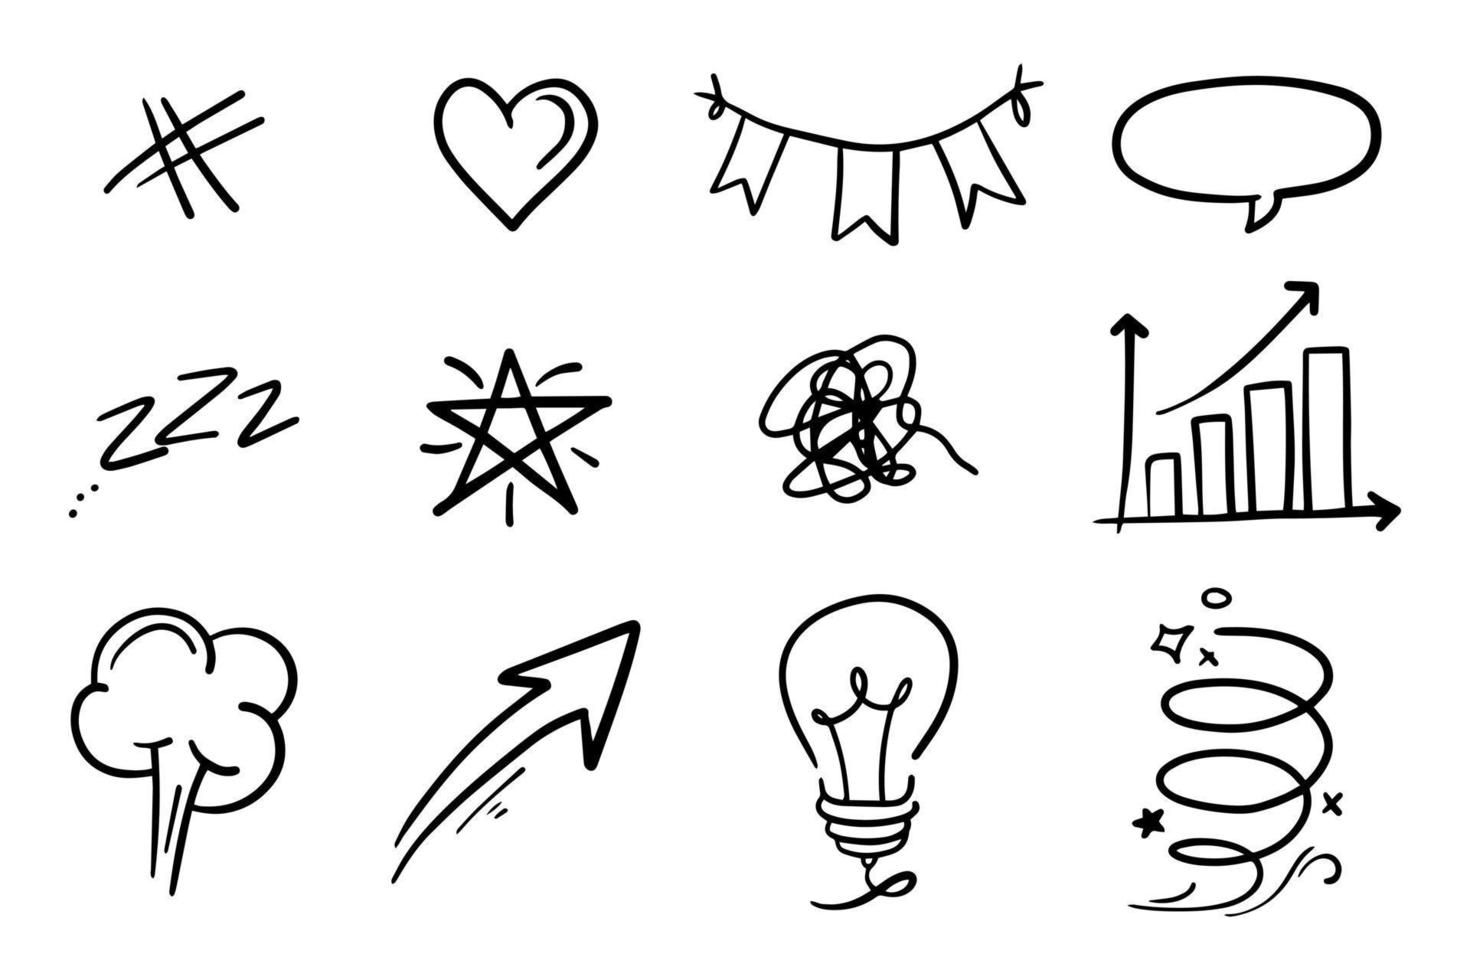 conjunto de vetores de elemento doodle, fita, seta, estrela e etc, para design de conceito.